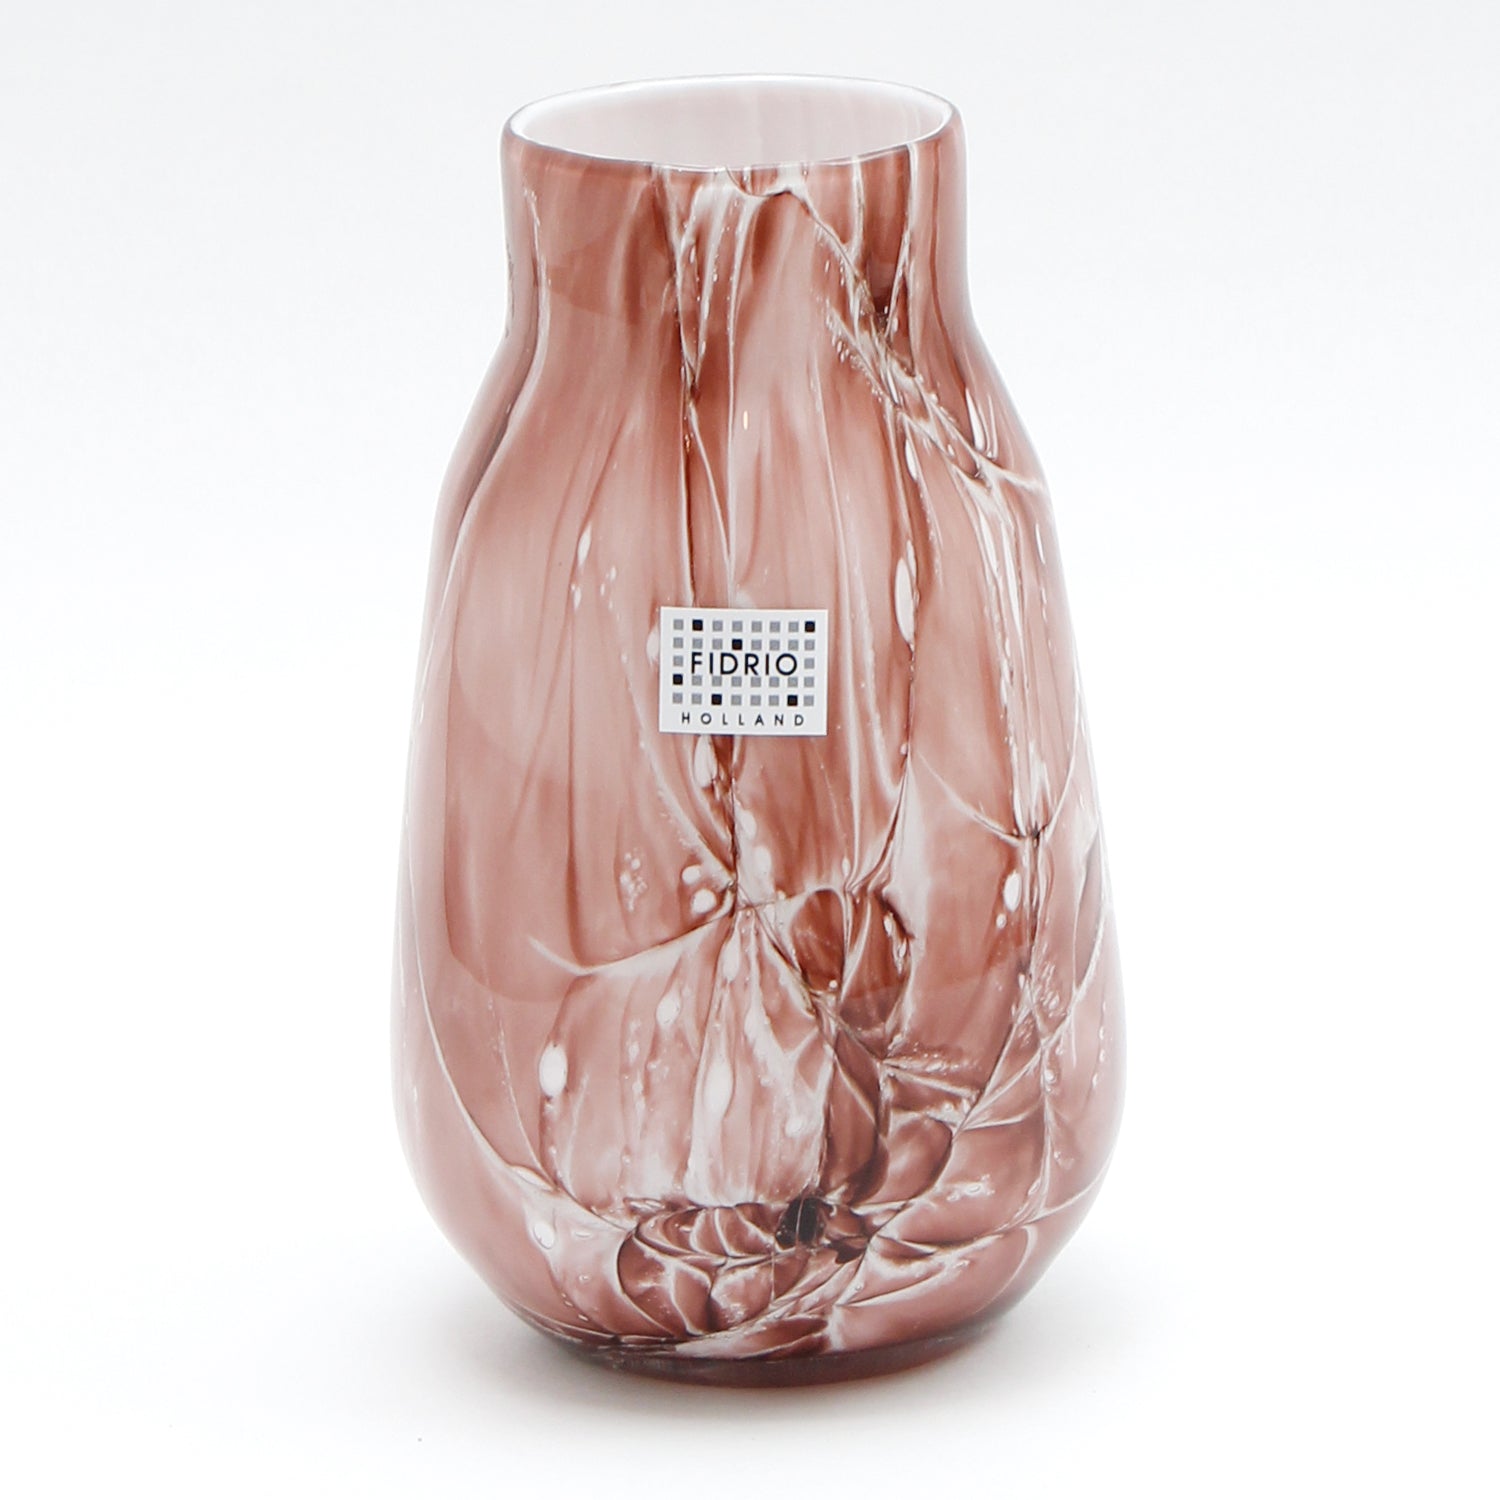 FIDRIO フラワーベース Toscany small EARTH 花瓶